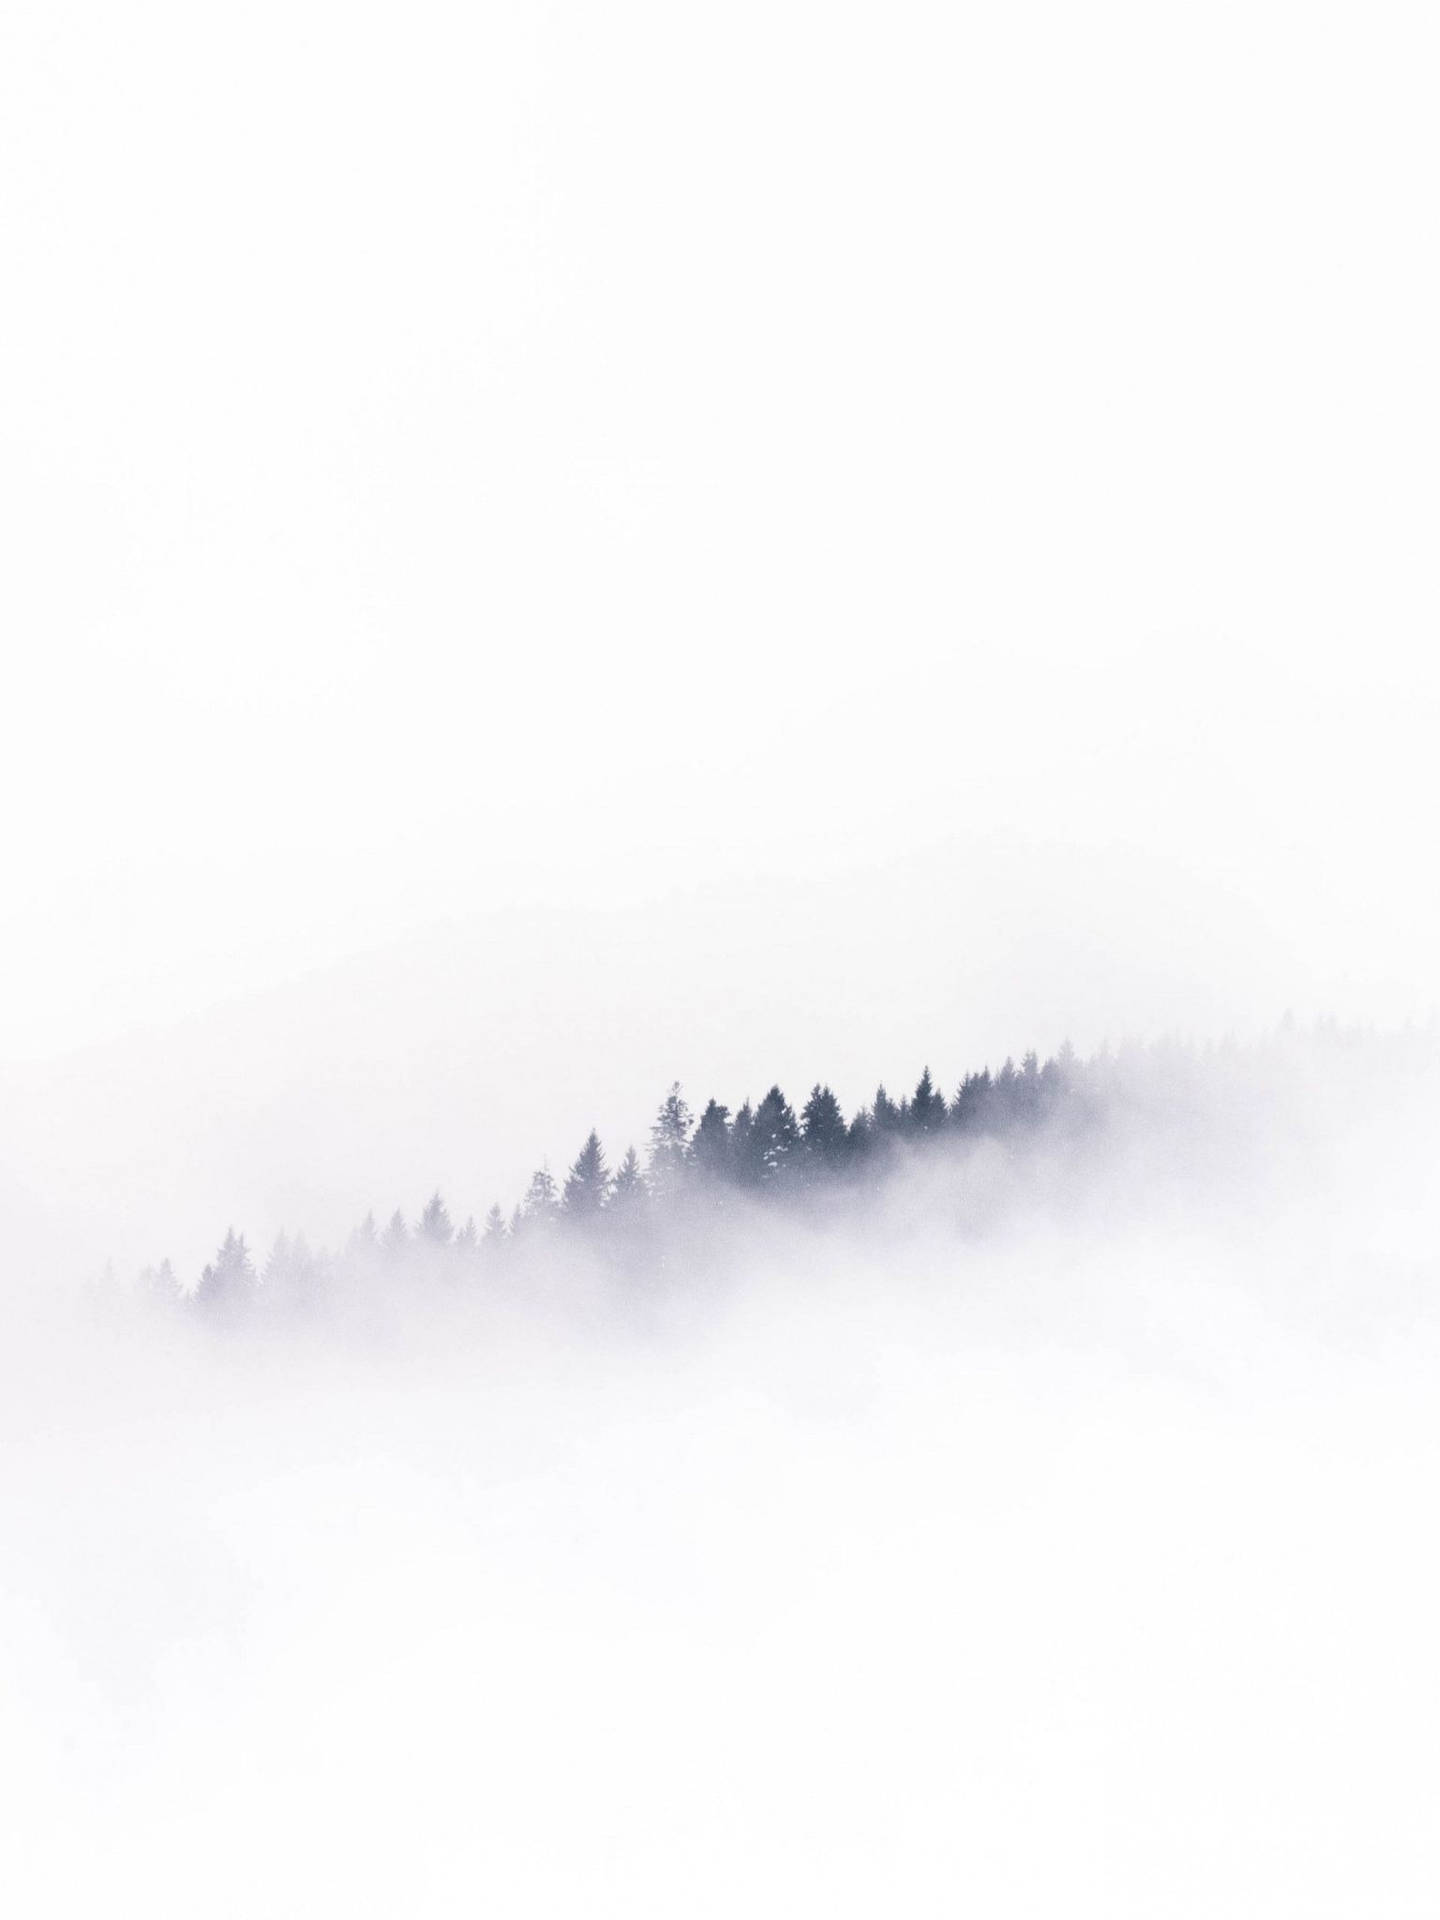 Foggy Forest White Minimalist Background